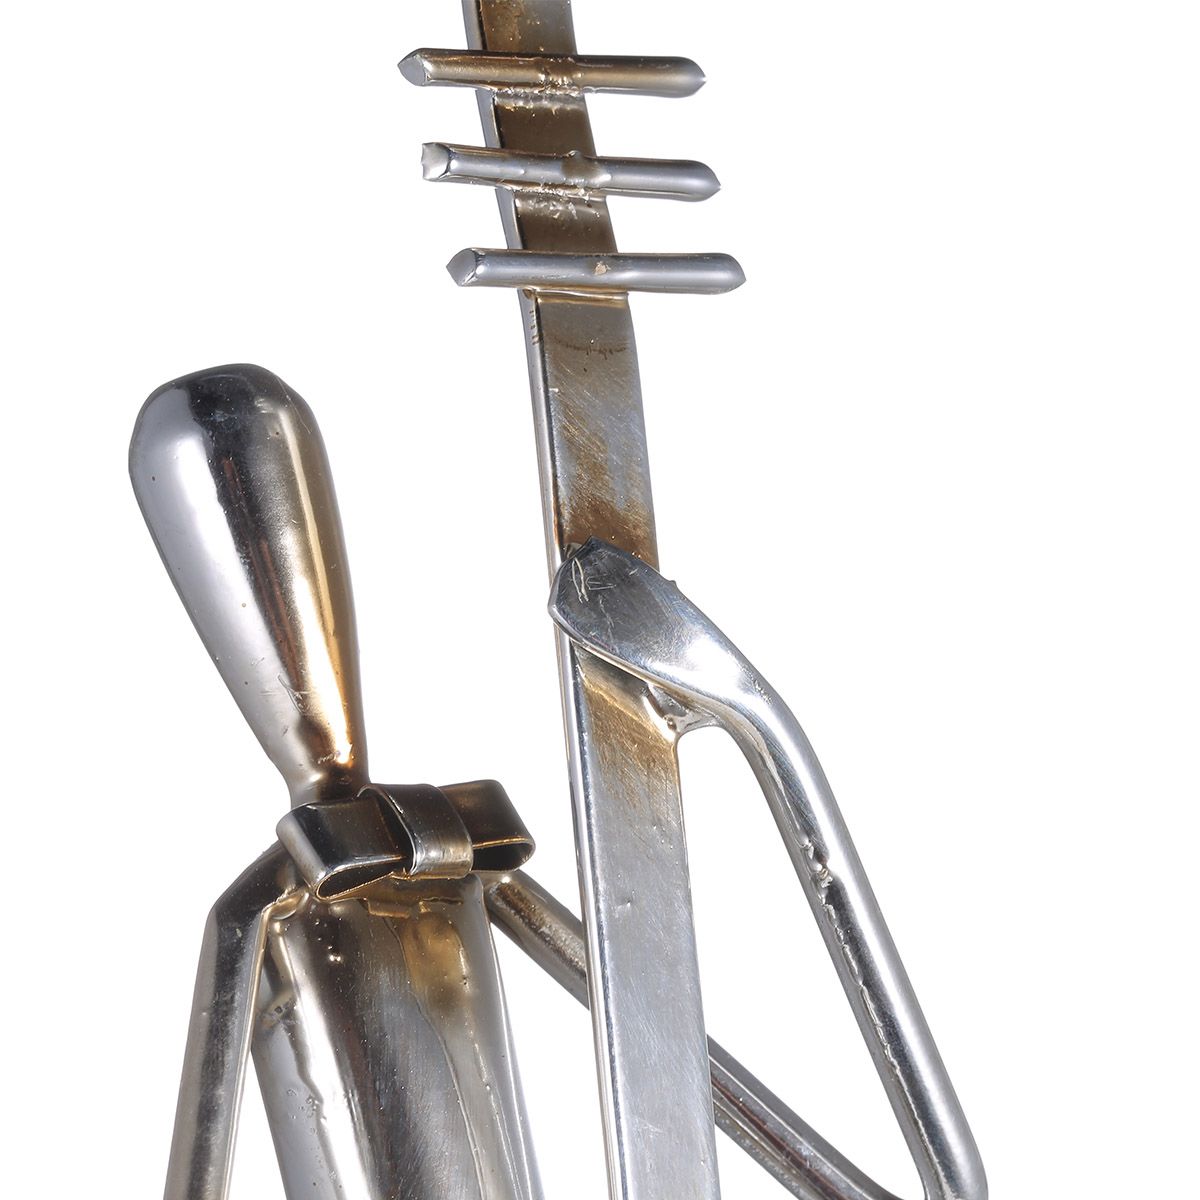 Tooarts Metal Sculpture Orchestra Cello Iron Sculpture Abstract Sculpture Modern Sculpture Band Instrument Home Ornament